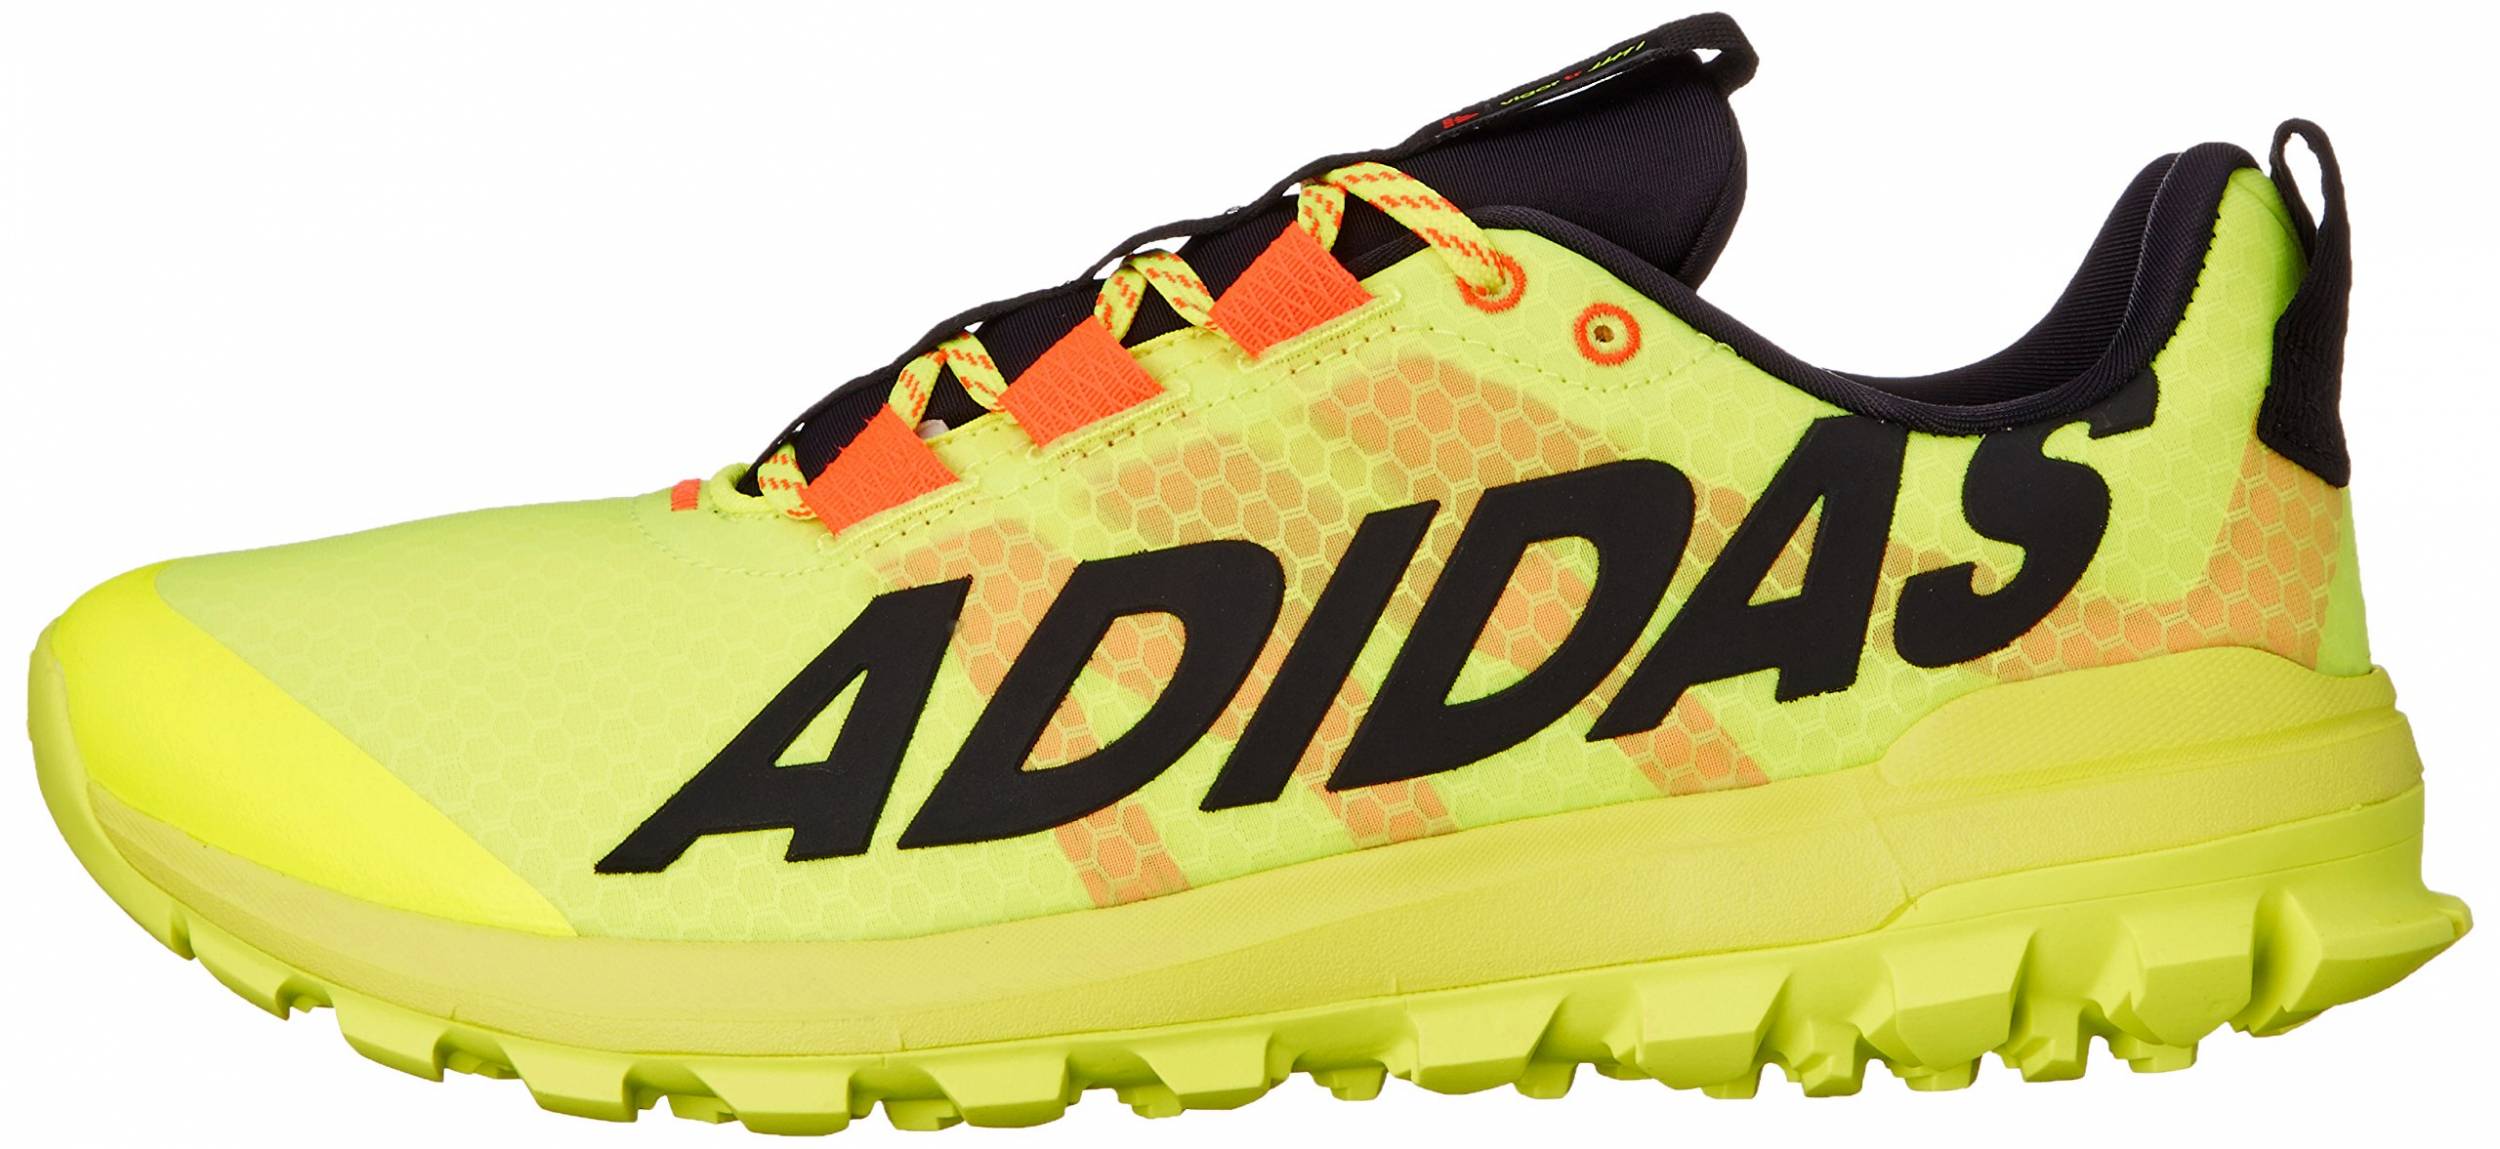 adidas running shoes yellow